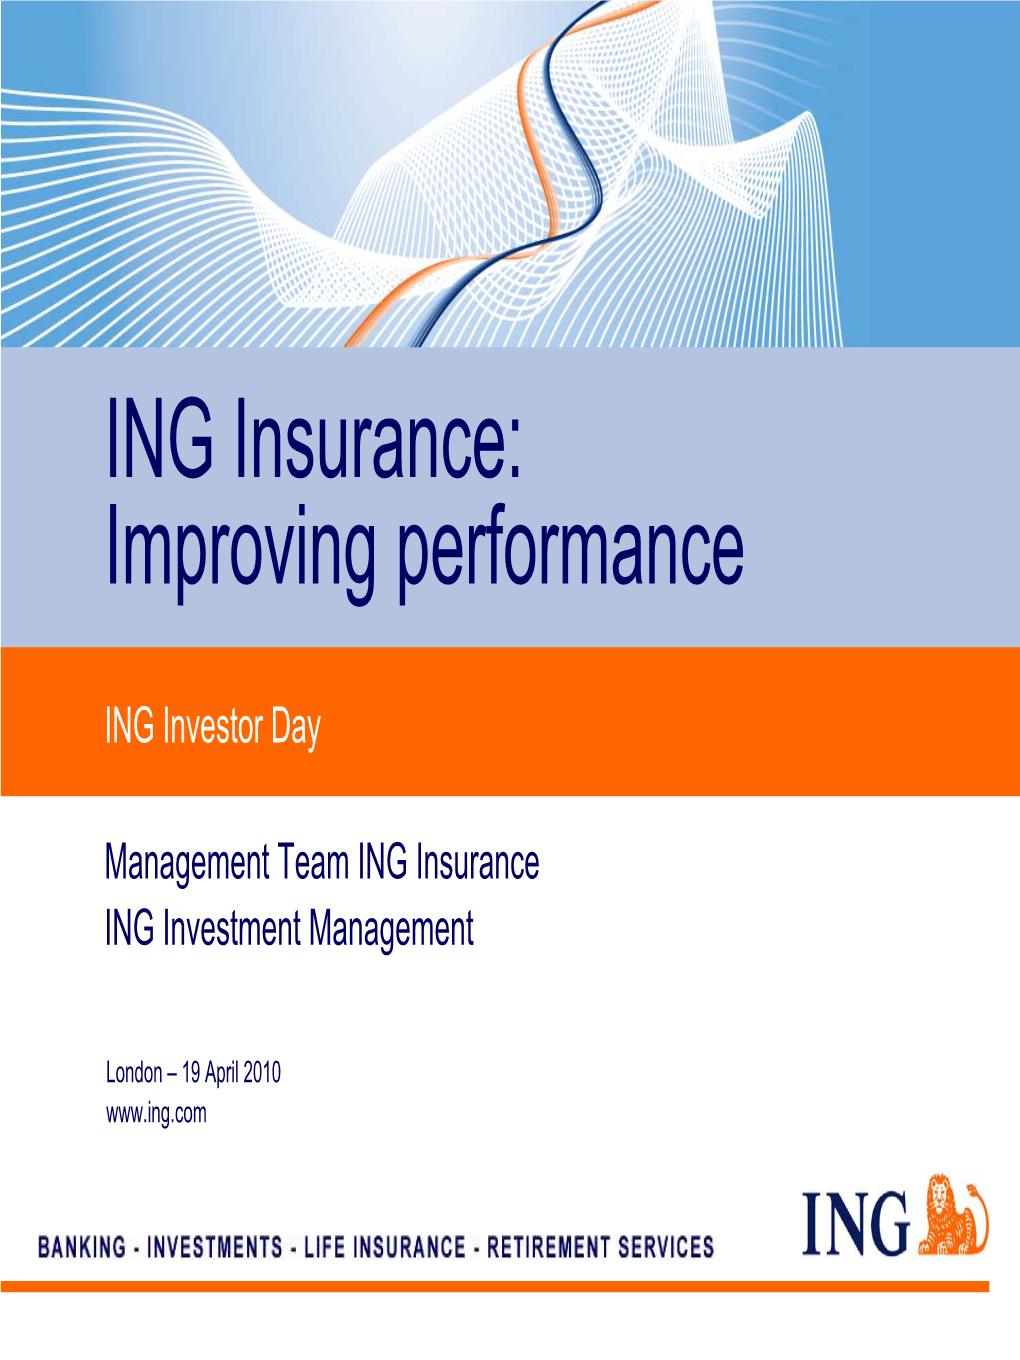 ING Insurance: Improving Performance